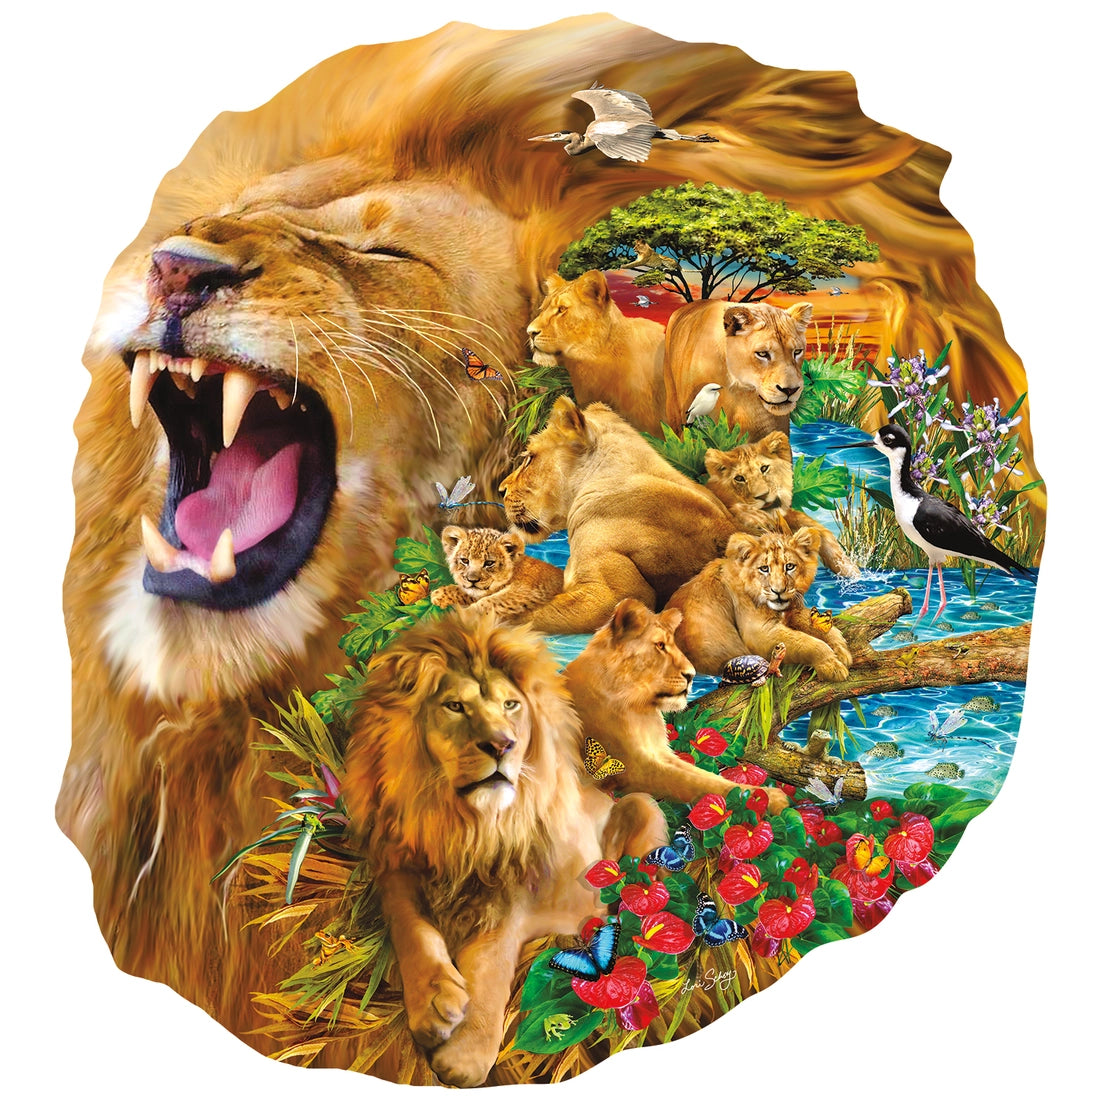 Puzzle Shaped Lion Family